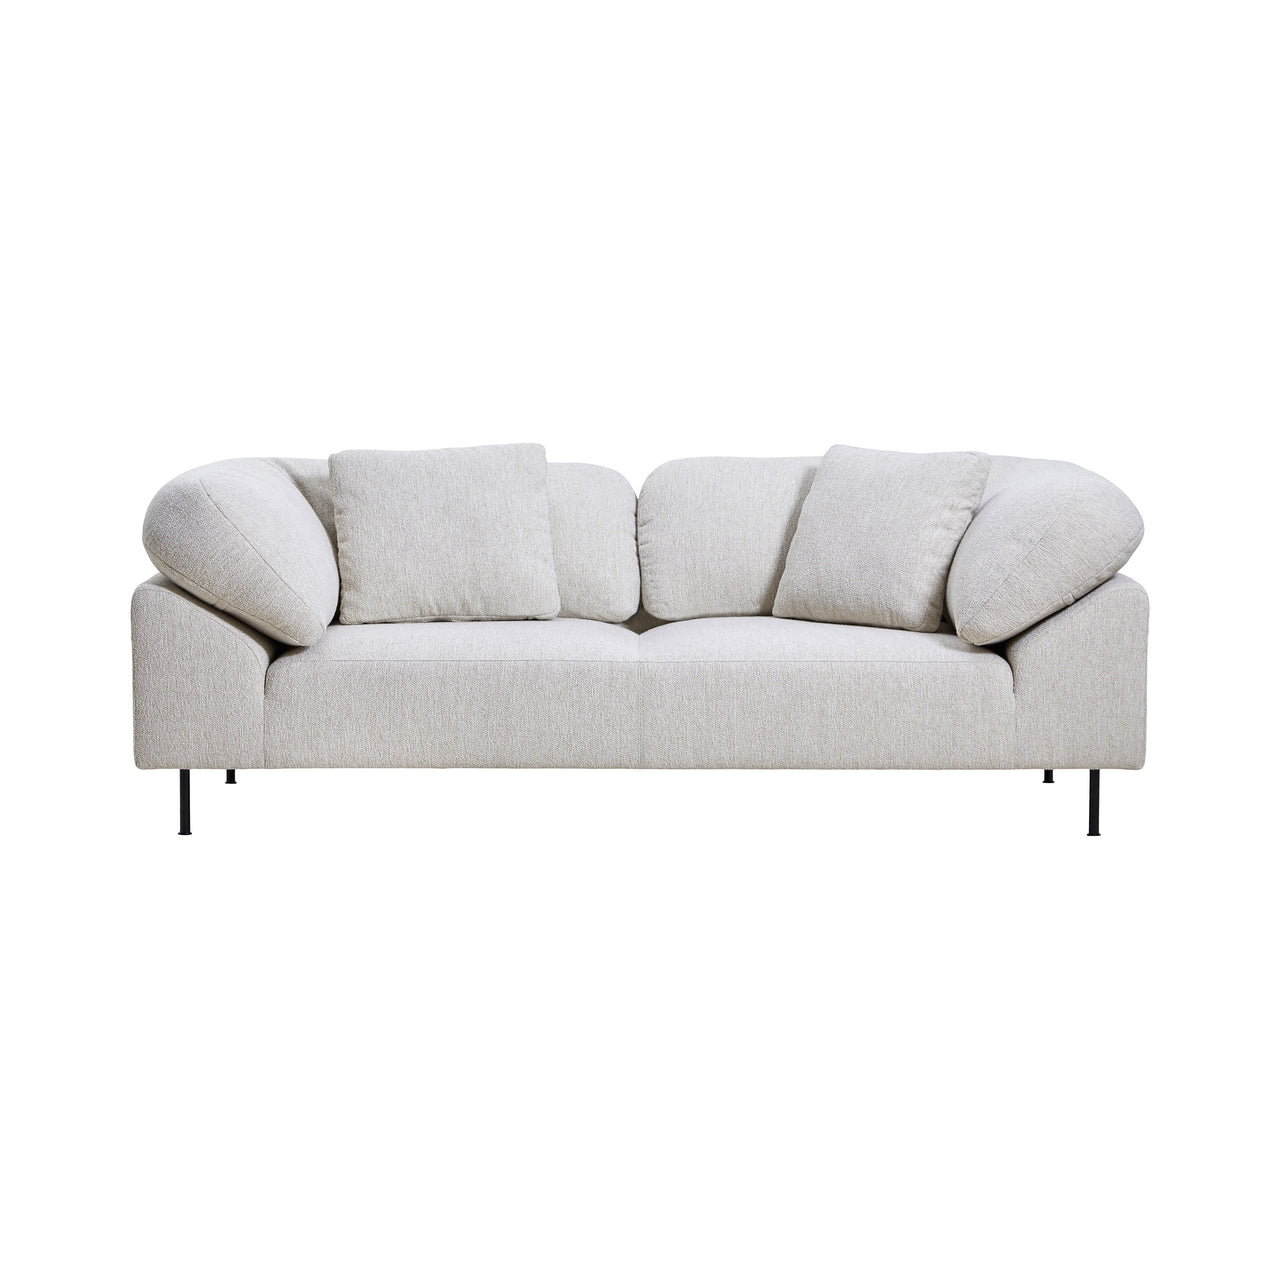 Collar Sofa: 2 Seater + Fabric Group 1A